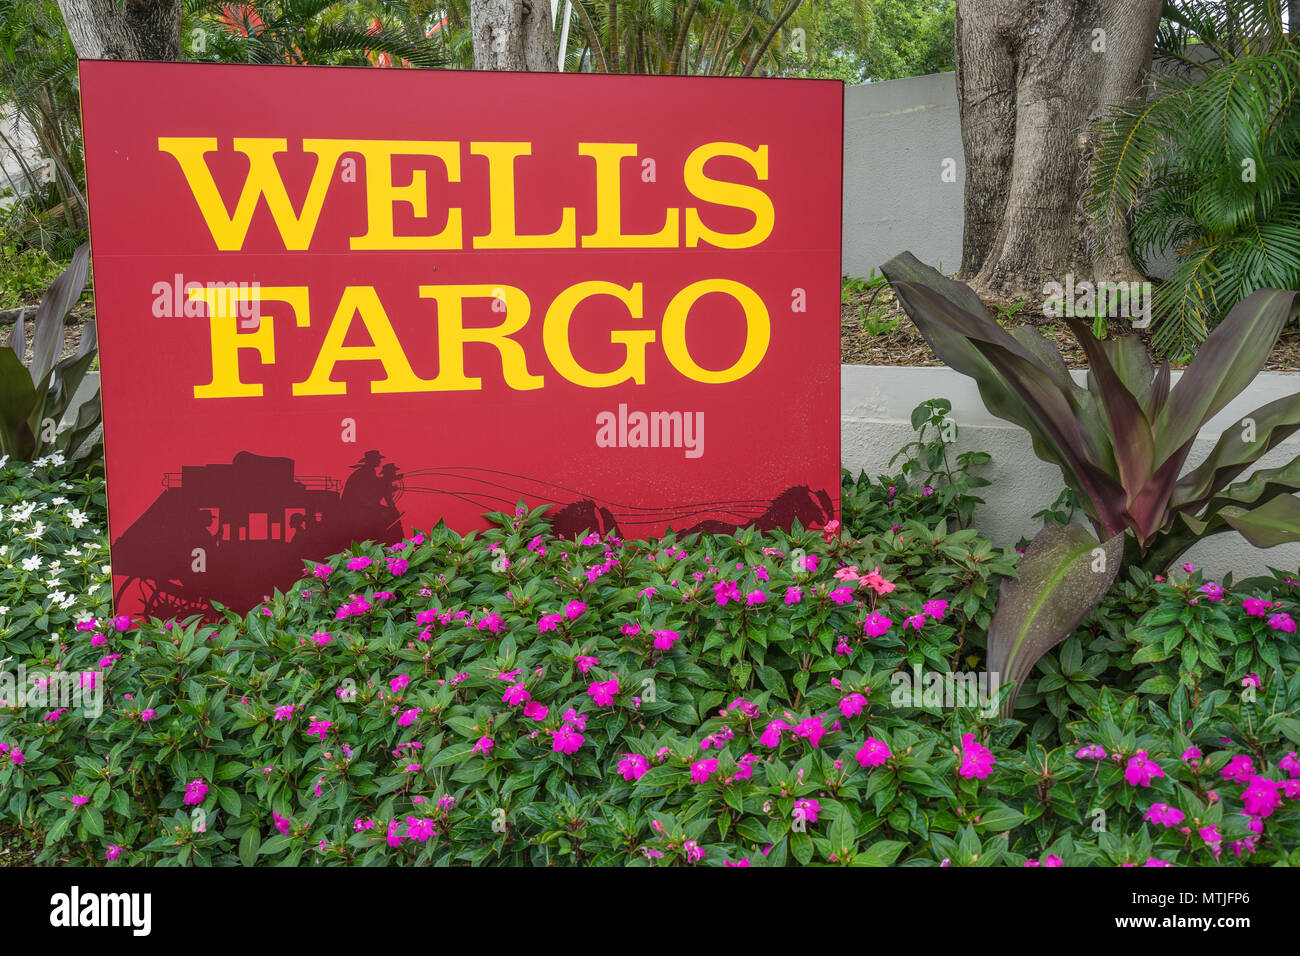 Wells Fargo Financial Services Foto de stock